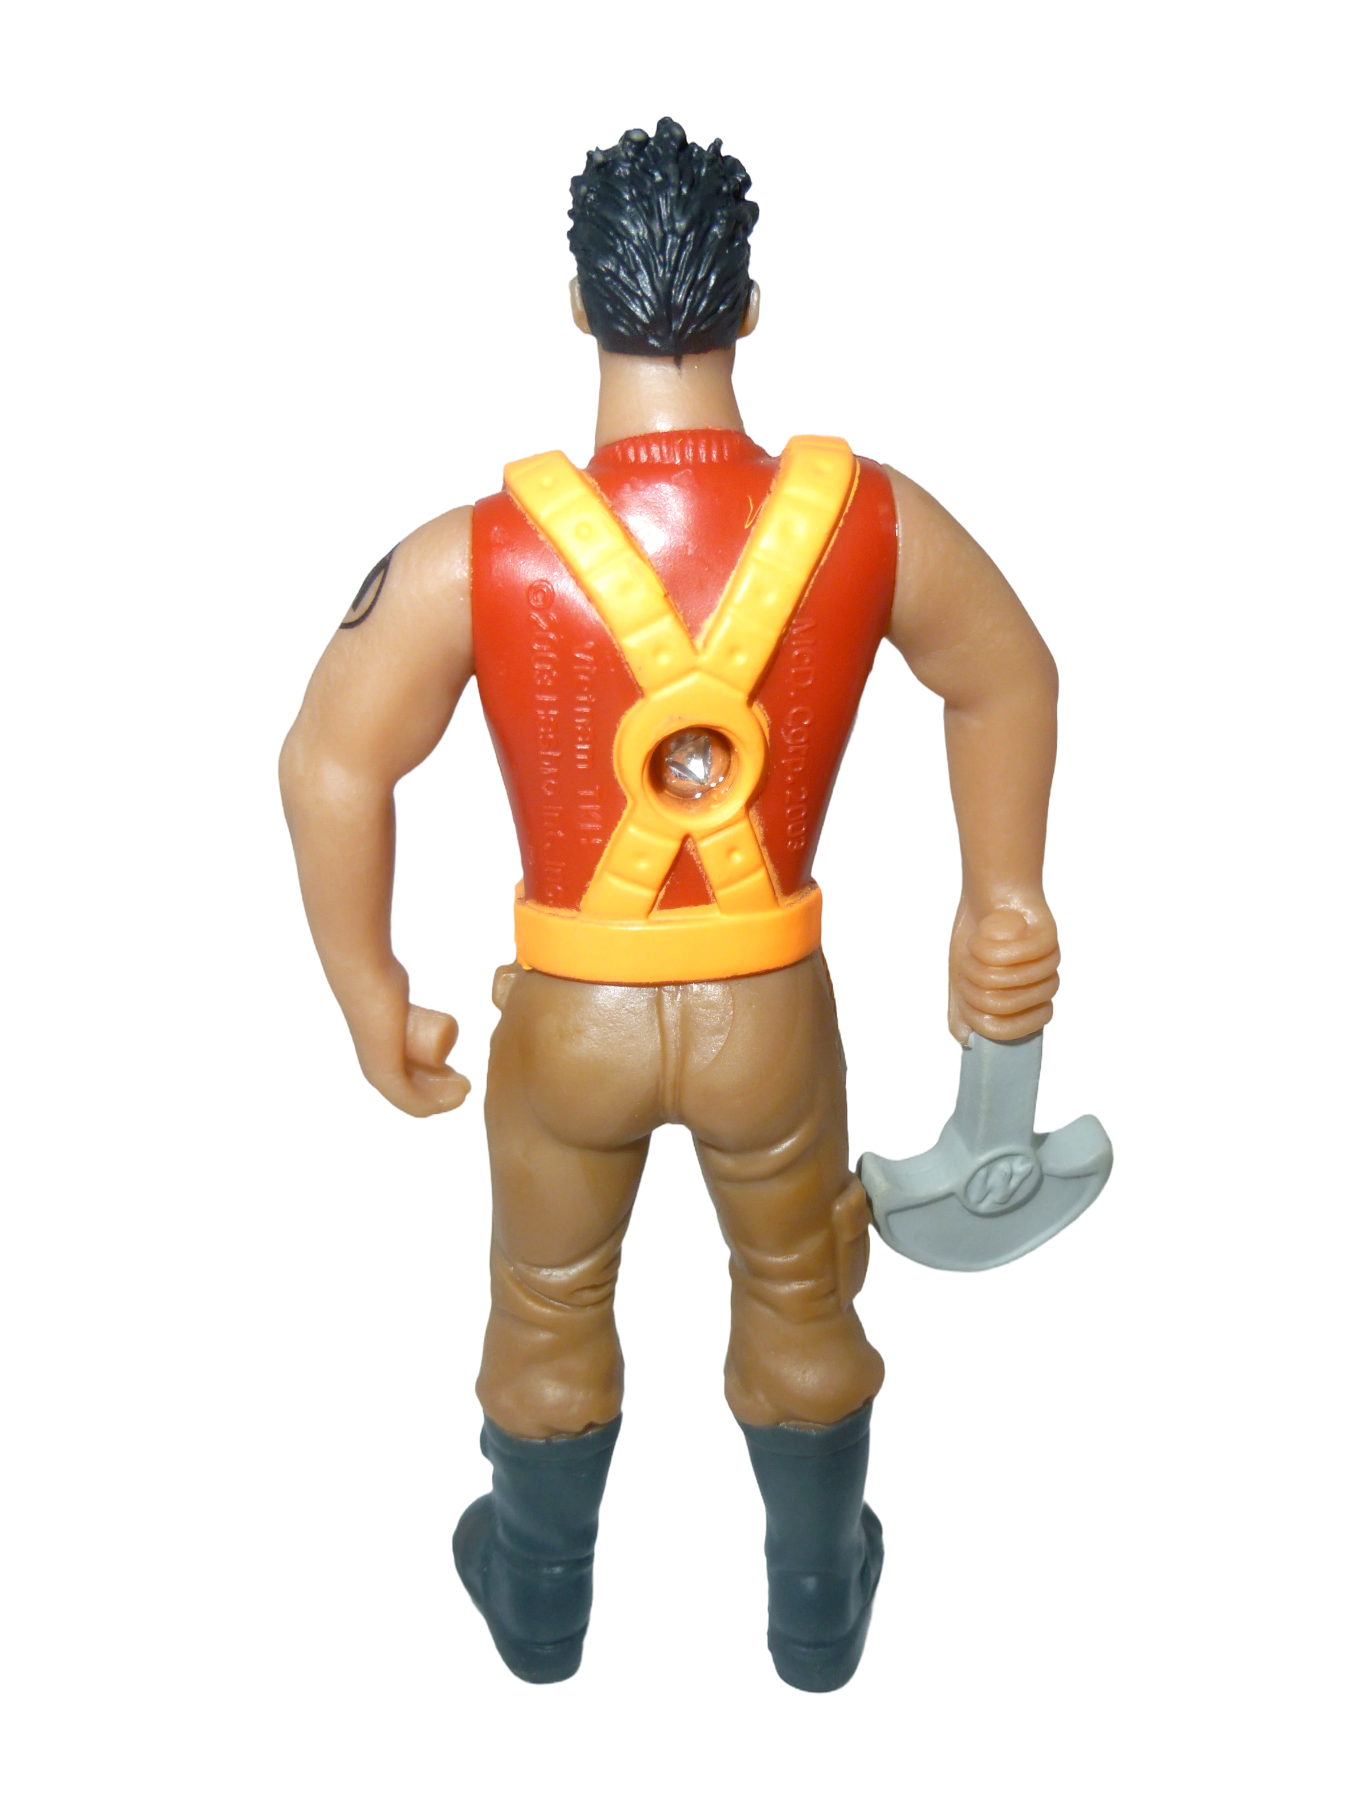 Action man figure from McDonalds Hasbro 2003 2